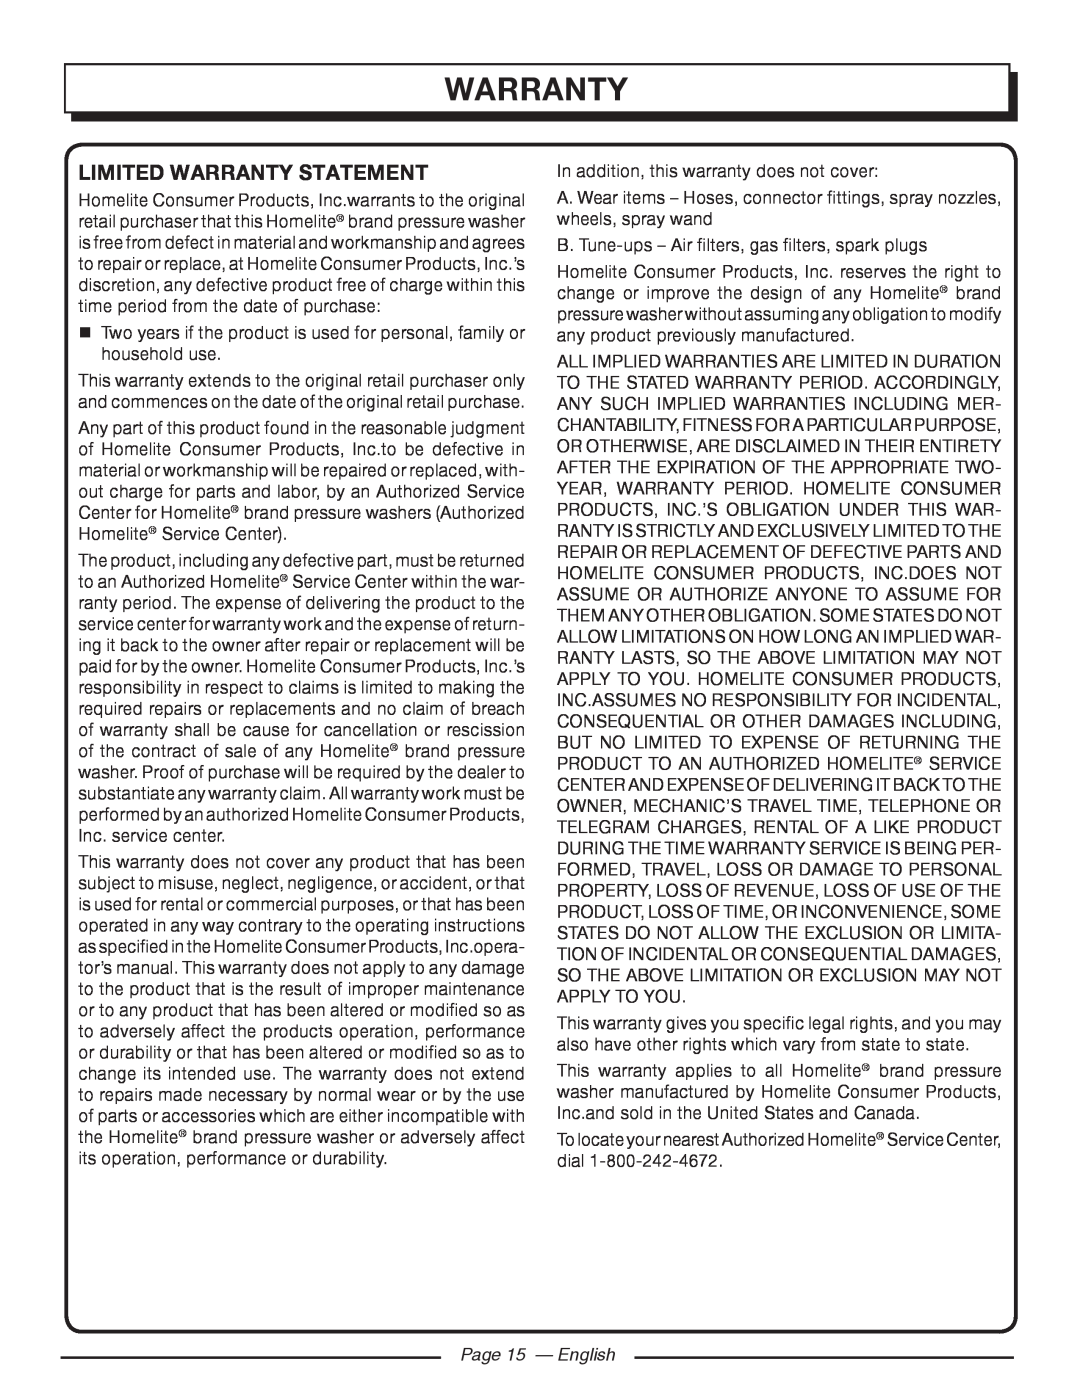 Homelite UT80993 manuel dutilisation Limited Warranty Statement, Page 15 - English 